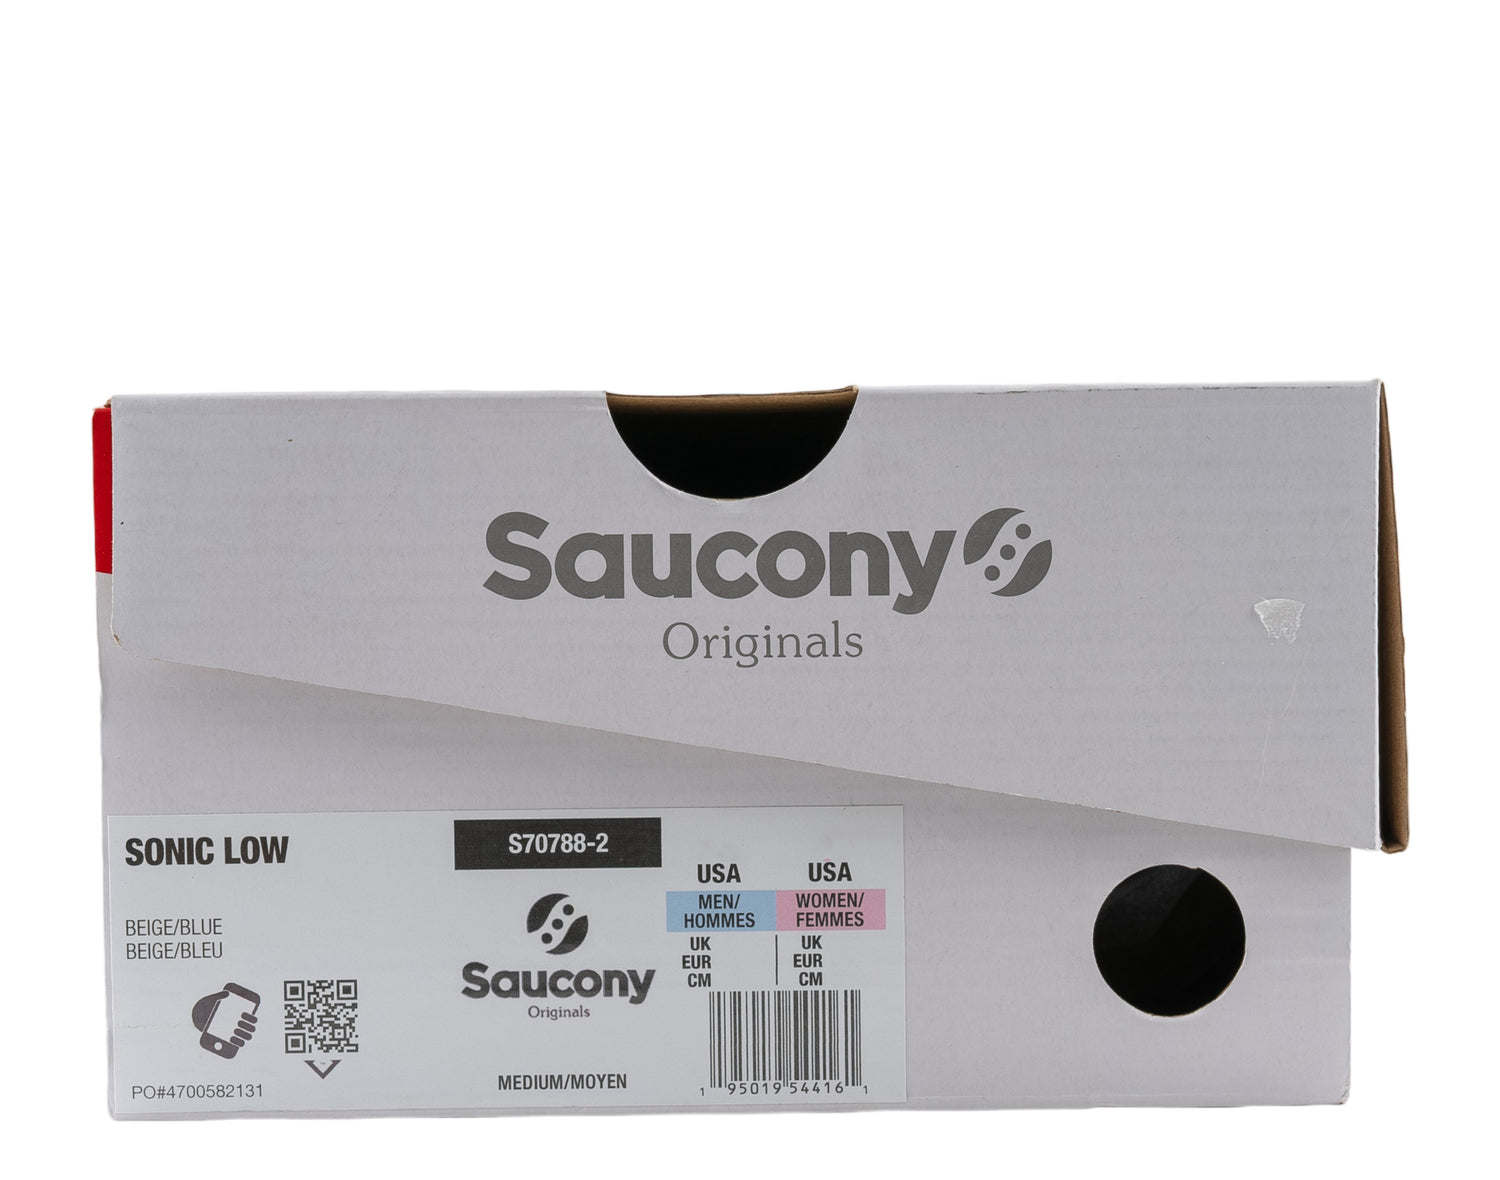 Saucony Originals Spot-Bilt™ Sonic Low Premium Shoes